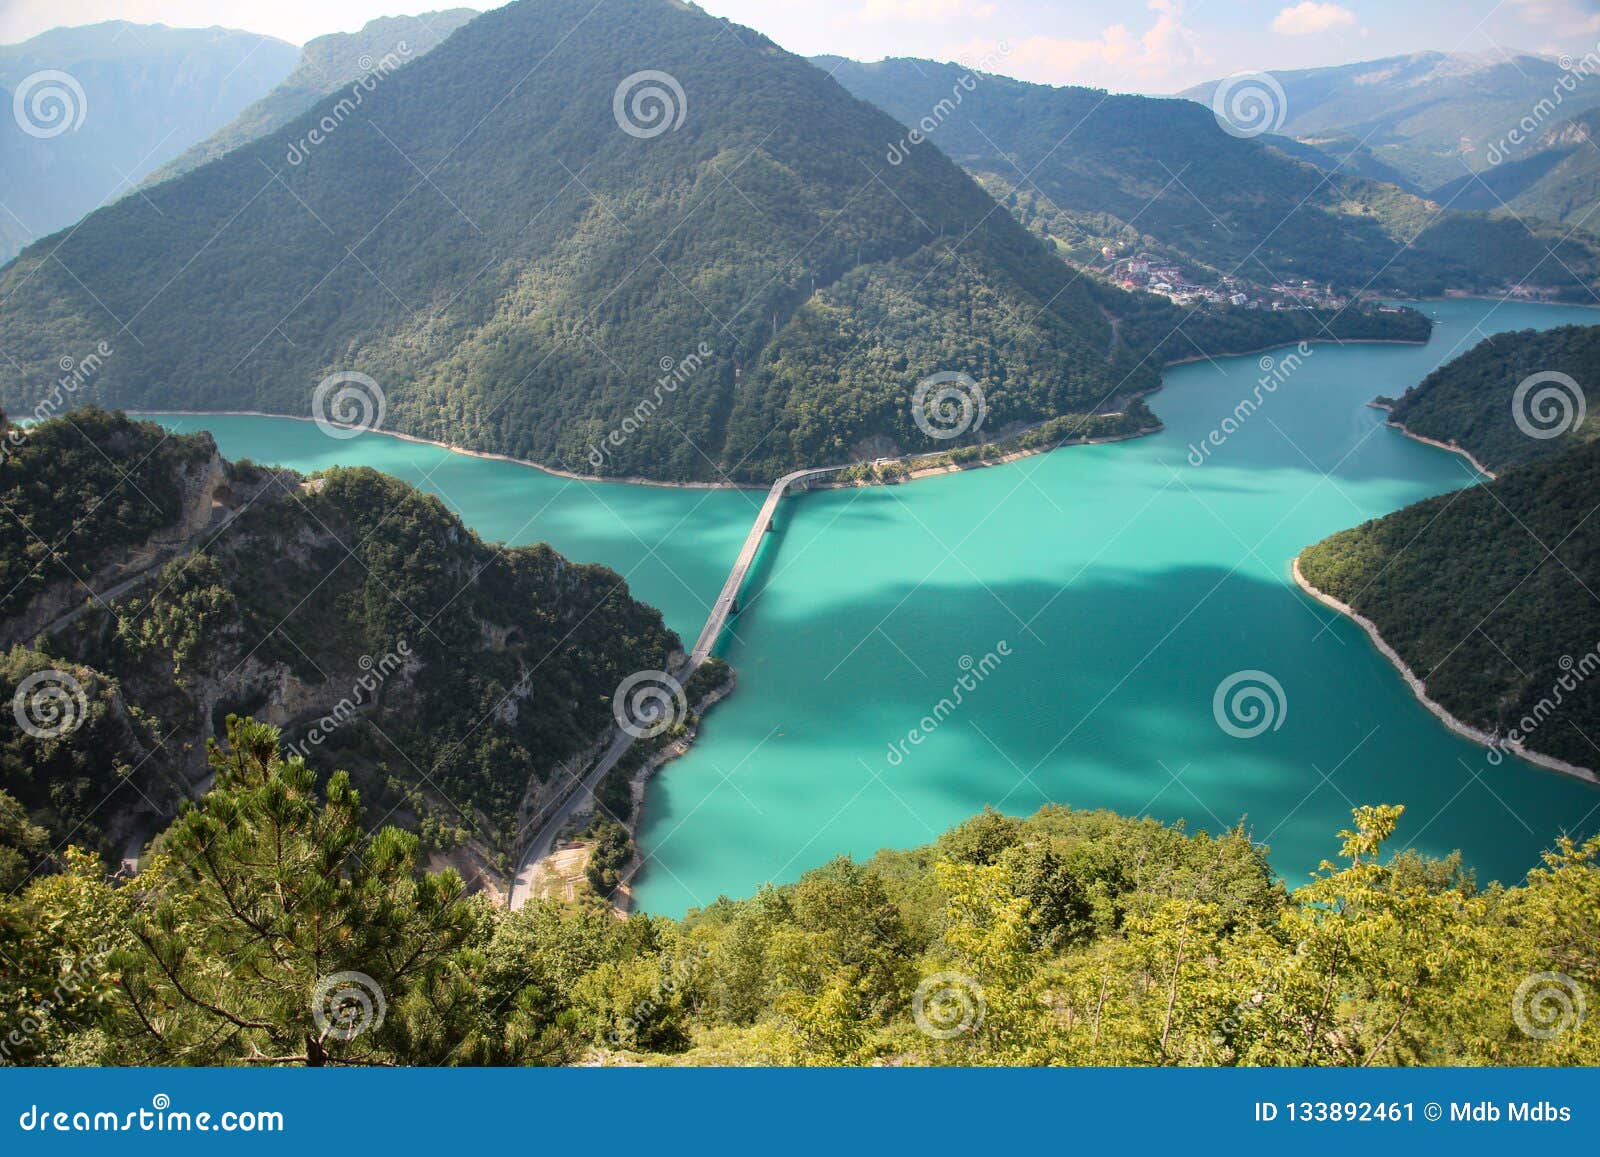 canyon of piva lake, montenegro